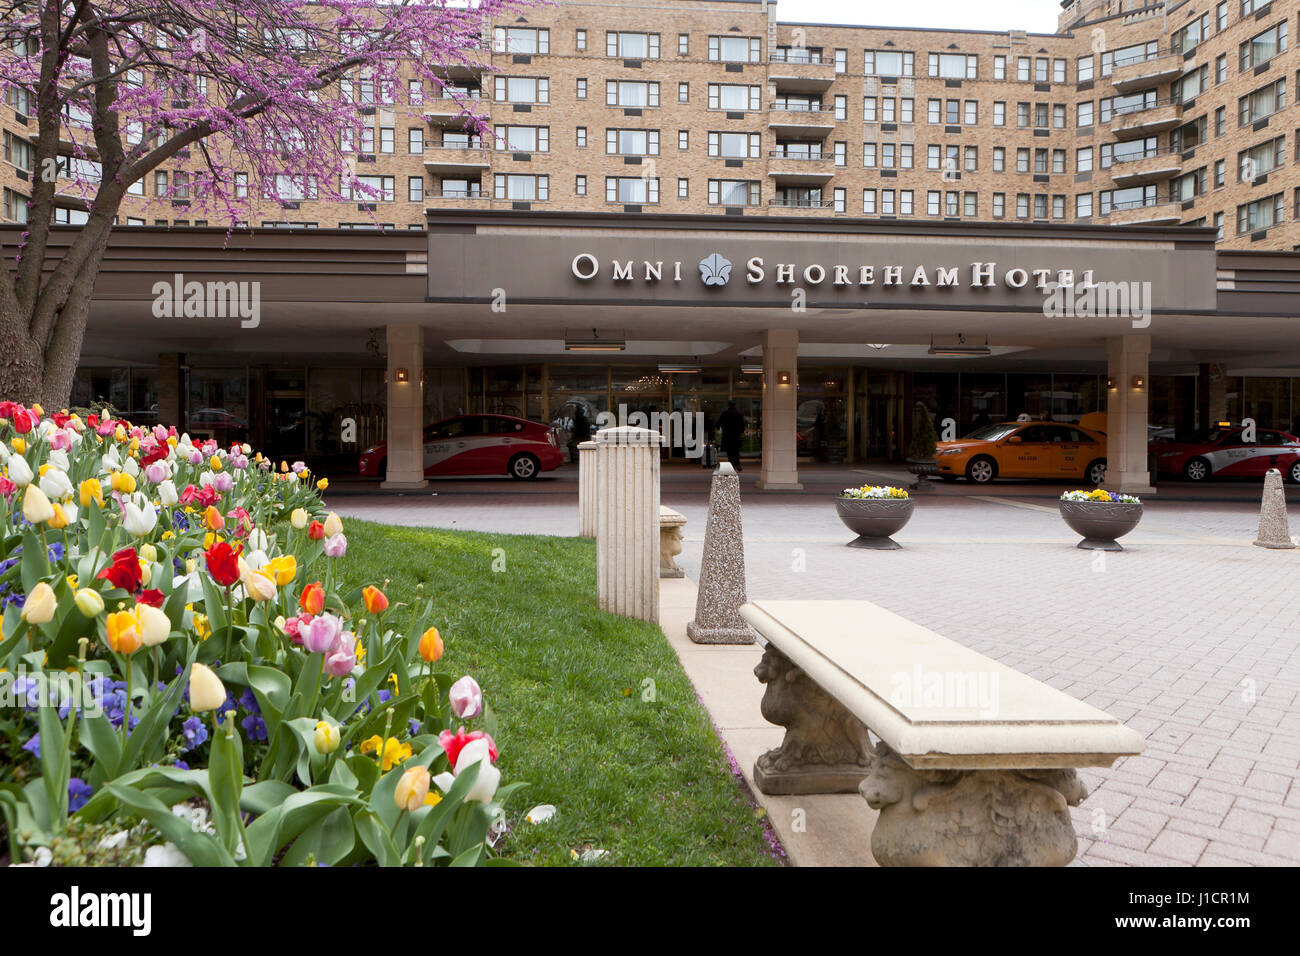 Omni Shoreham Hotel - Washington, DC USA Stockfoto